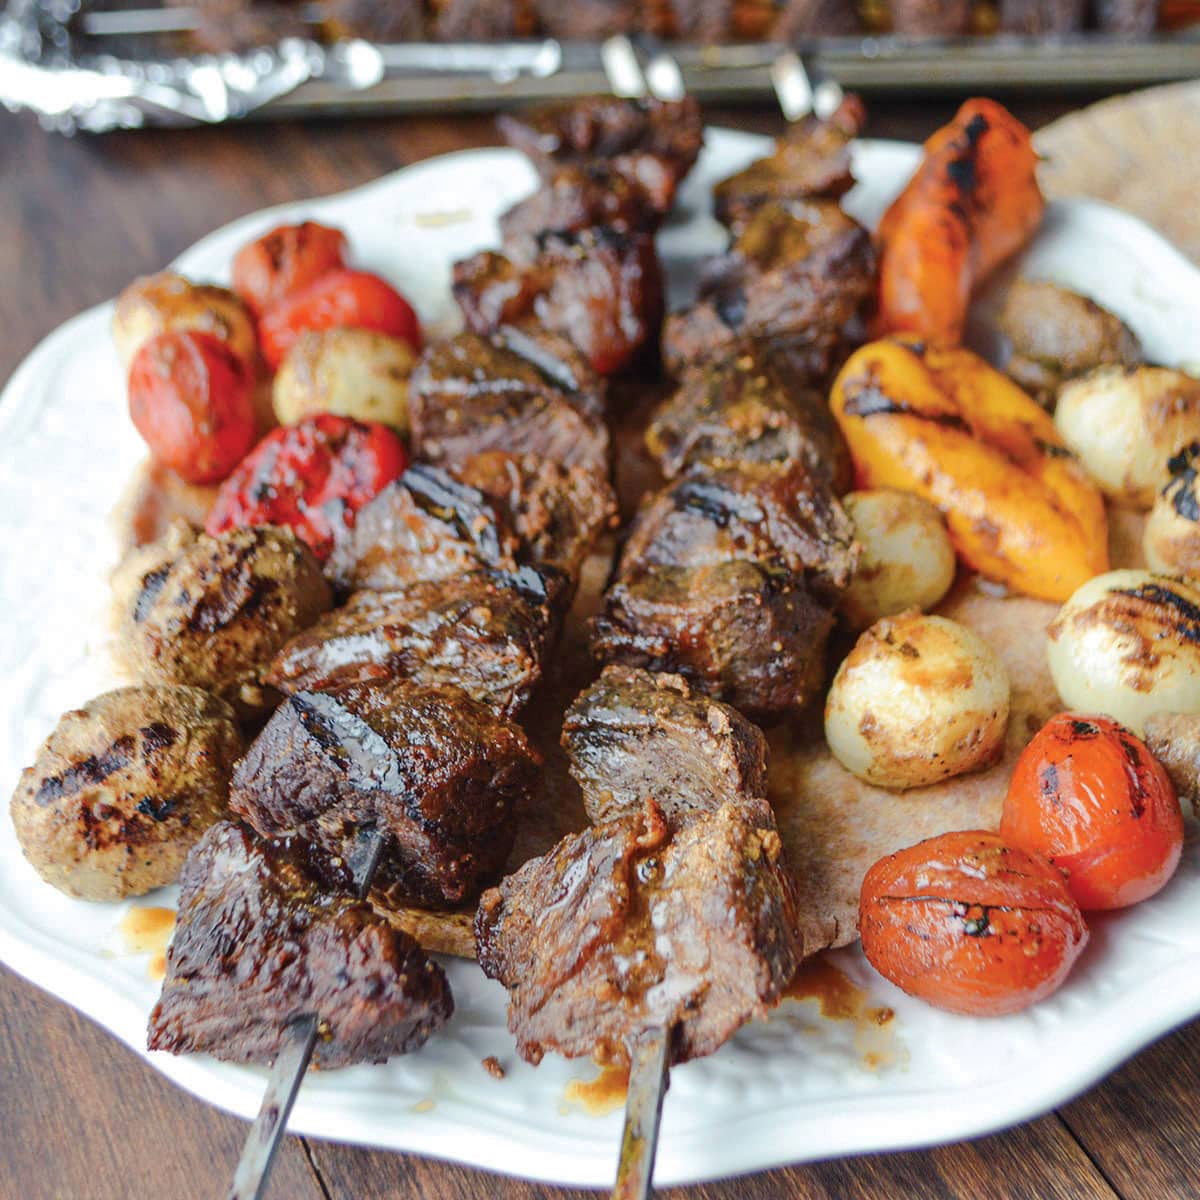 Armenian Shish Kebab - Skewered Lamb Cooked Over Hot Coals